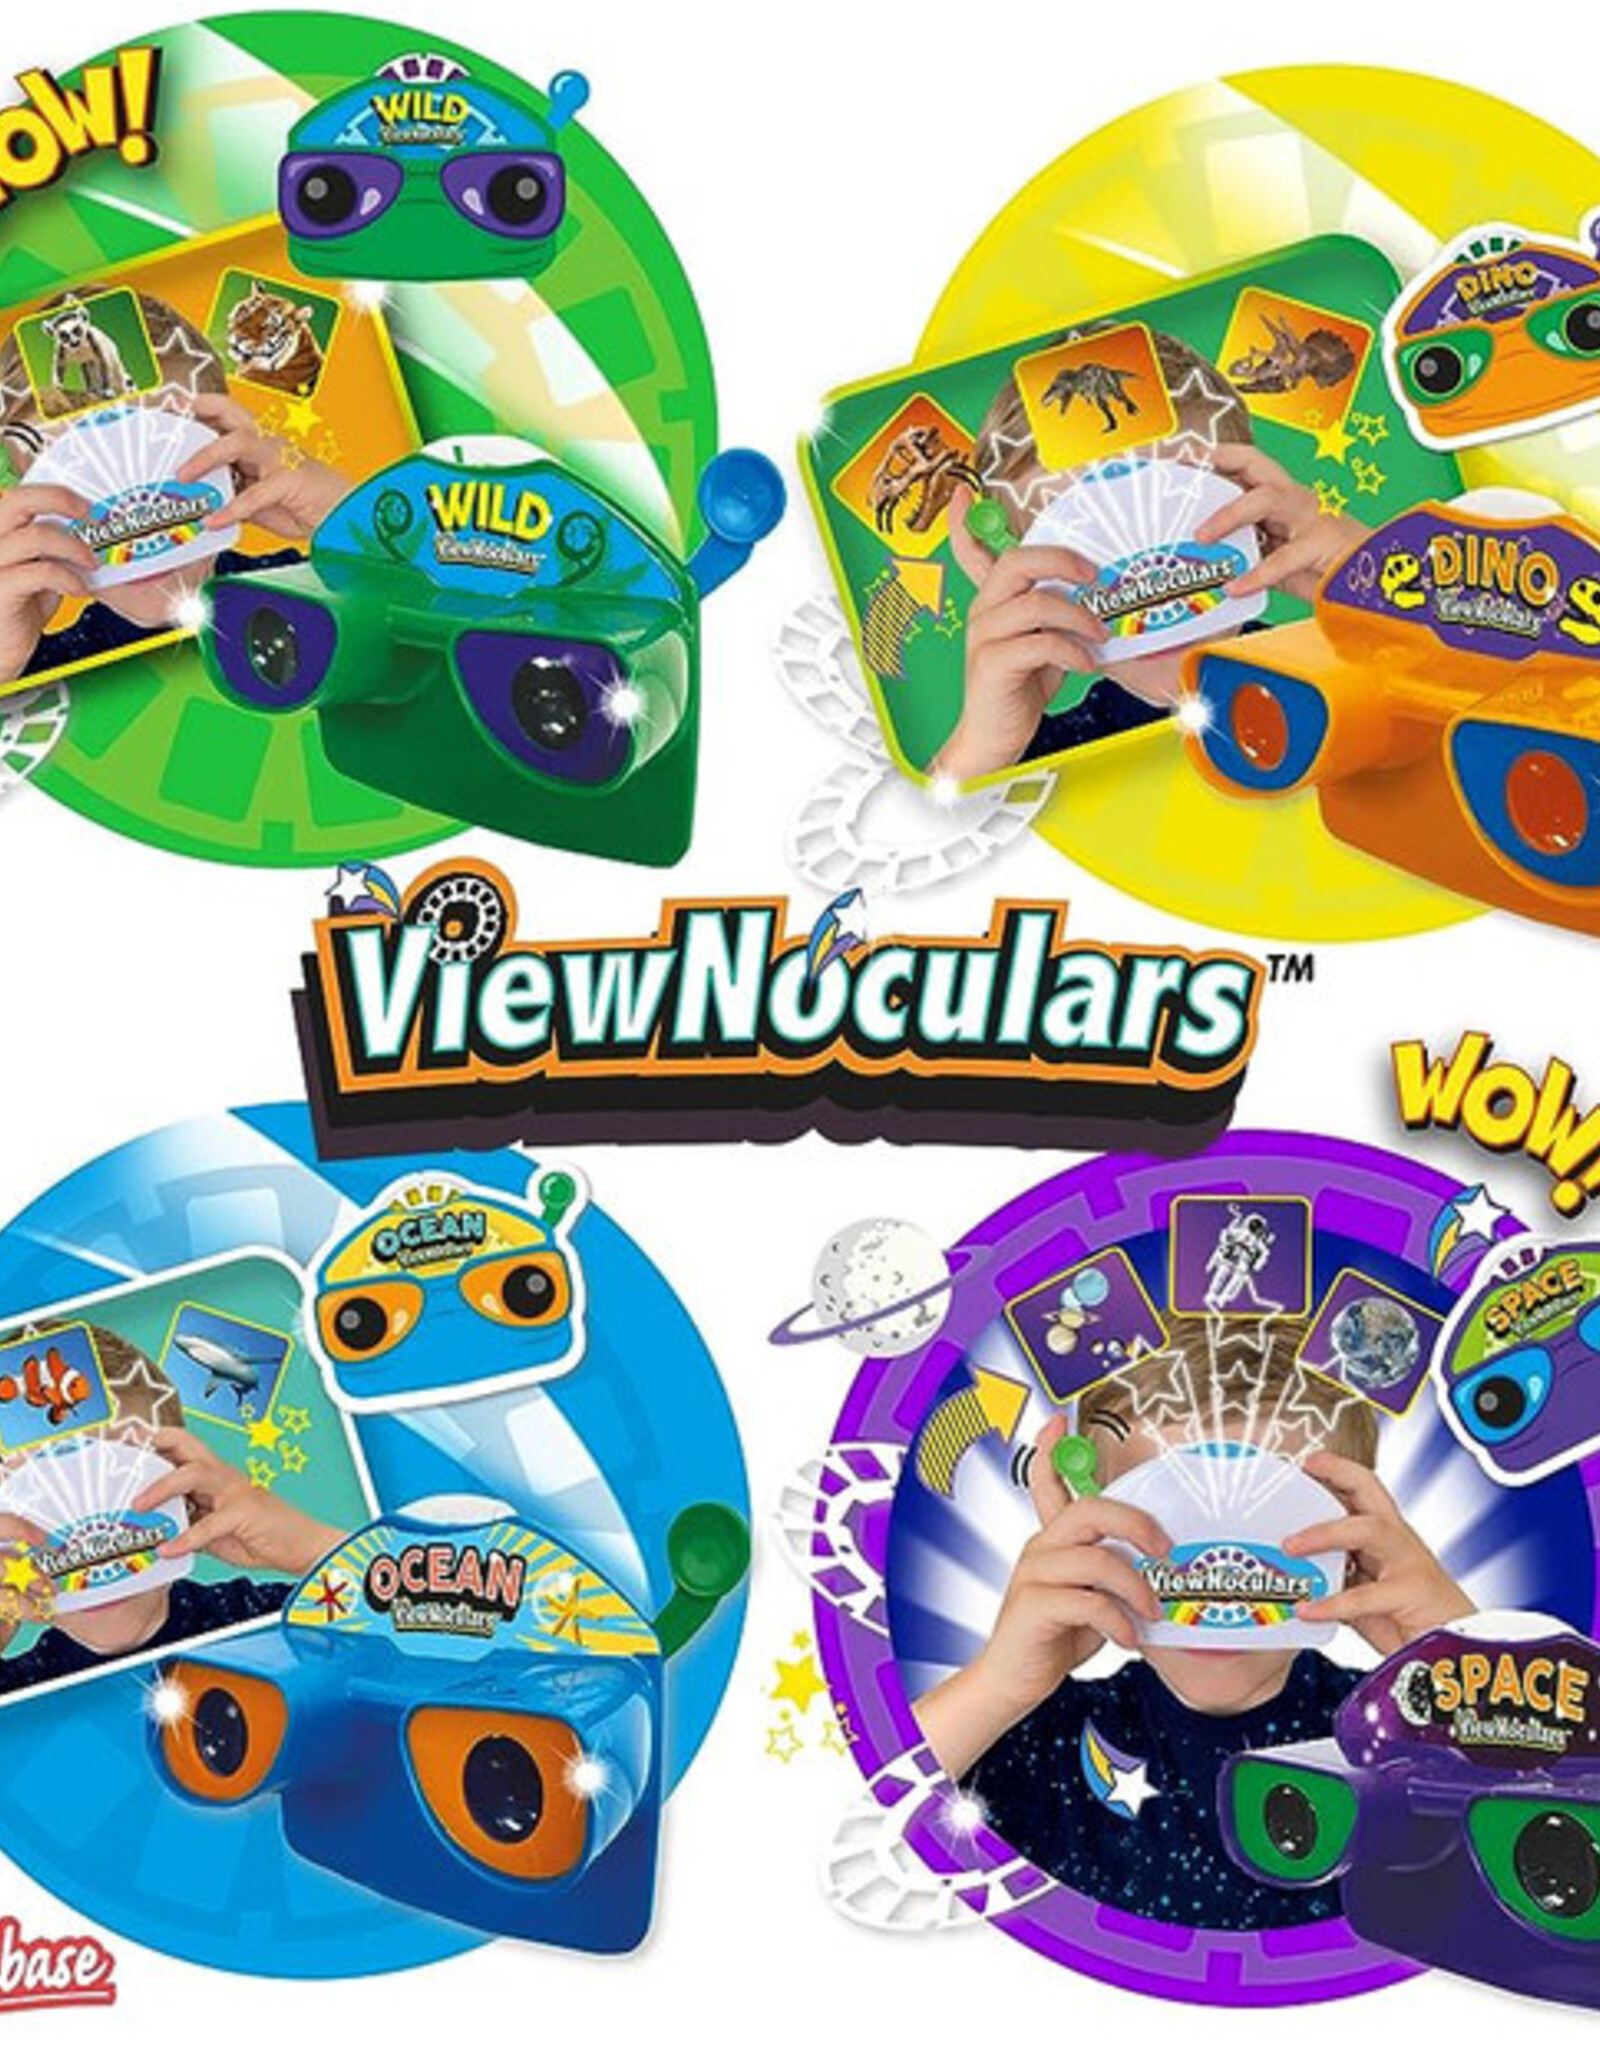 Viewnoculars